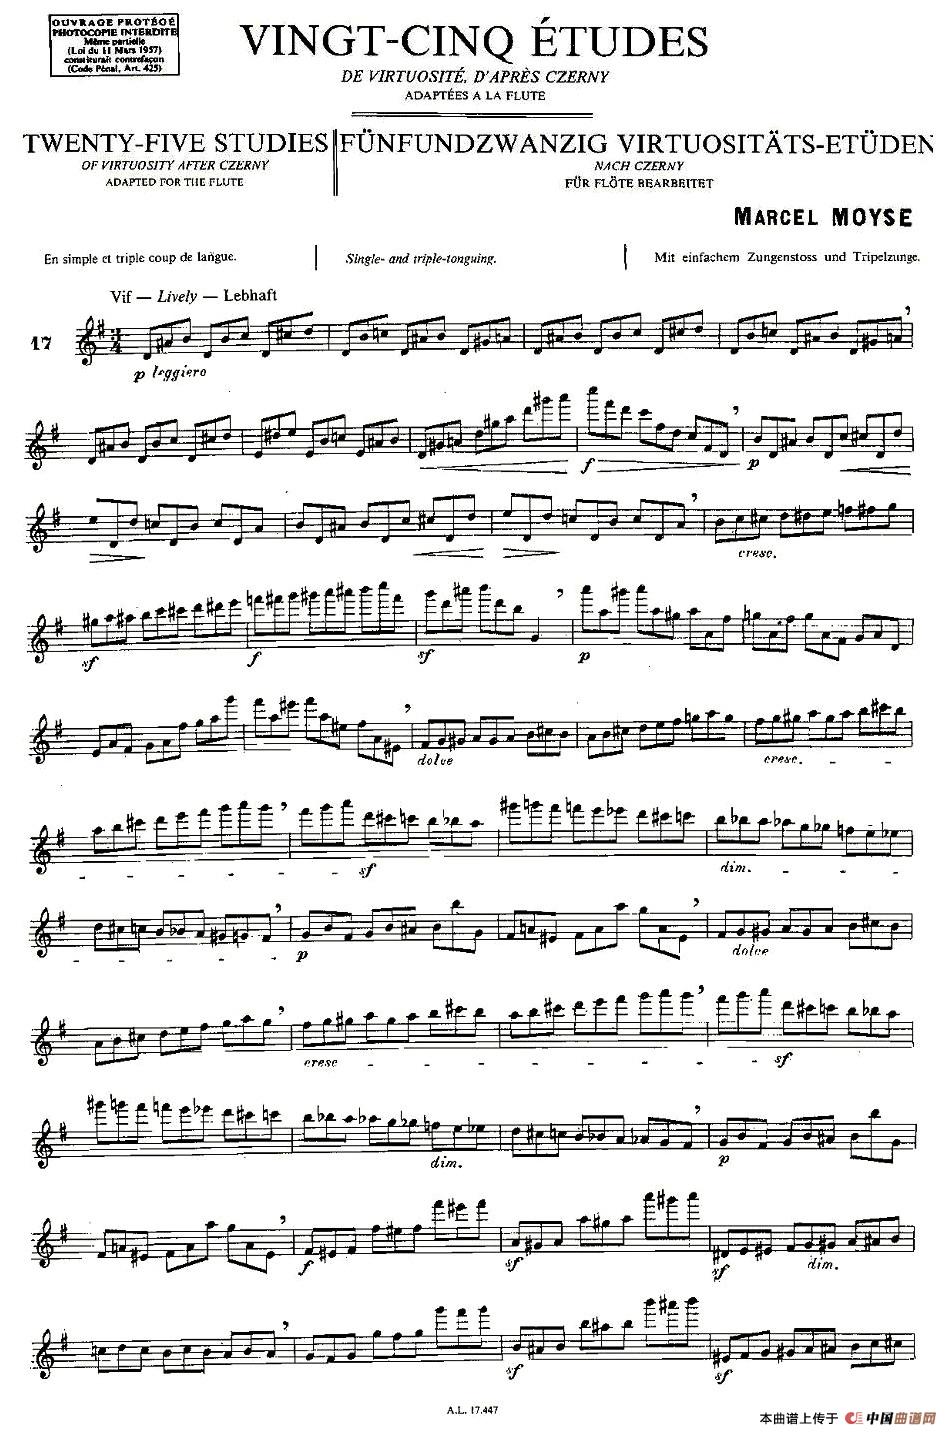 Moyse - 25 Studies after Czerny flute 之17（25首改编自车